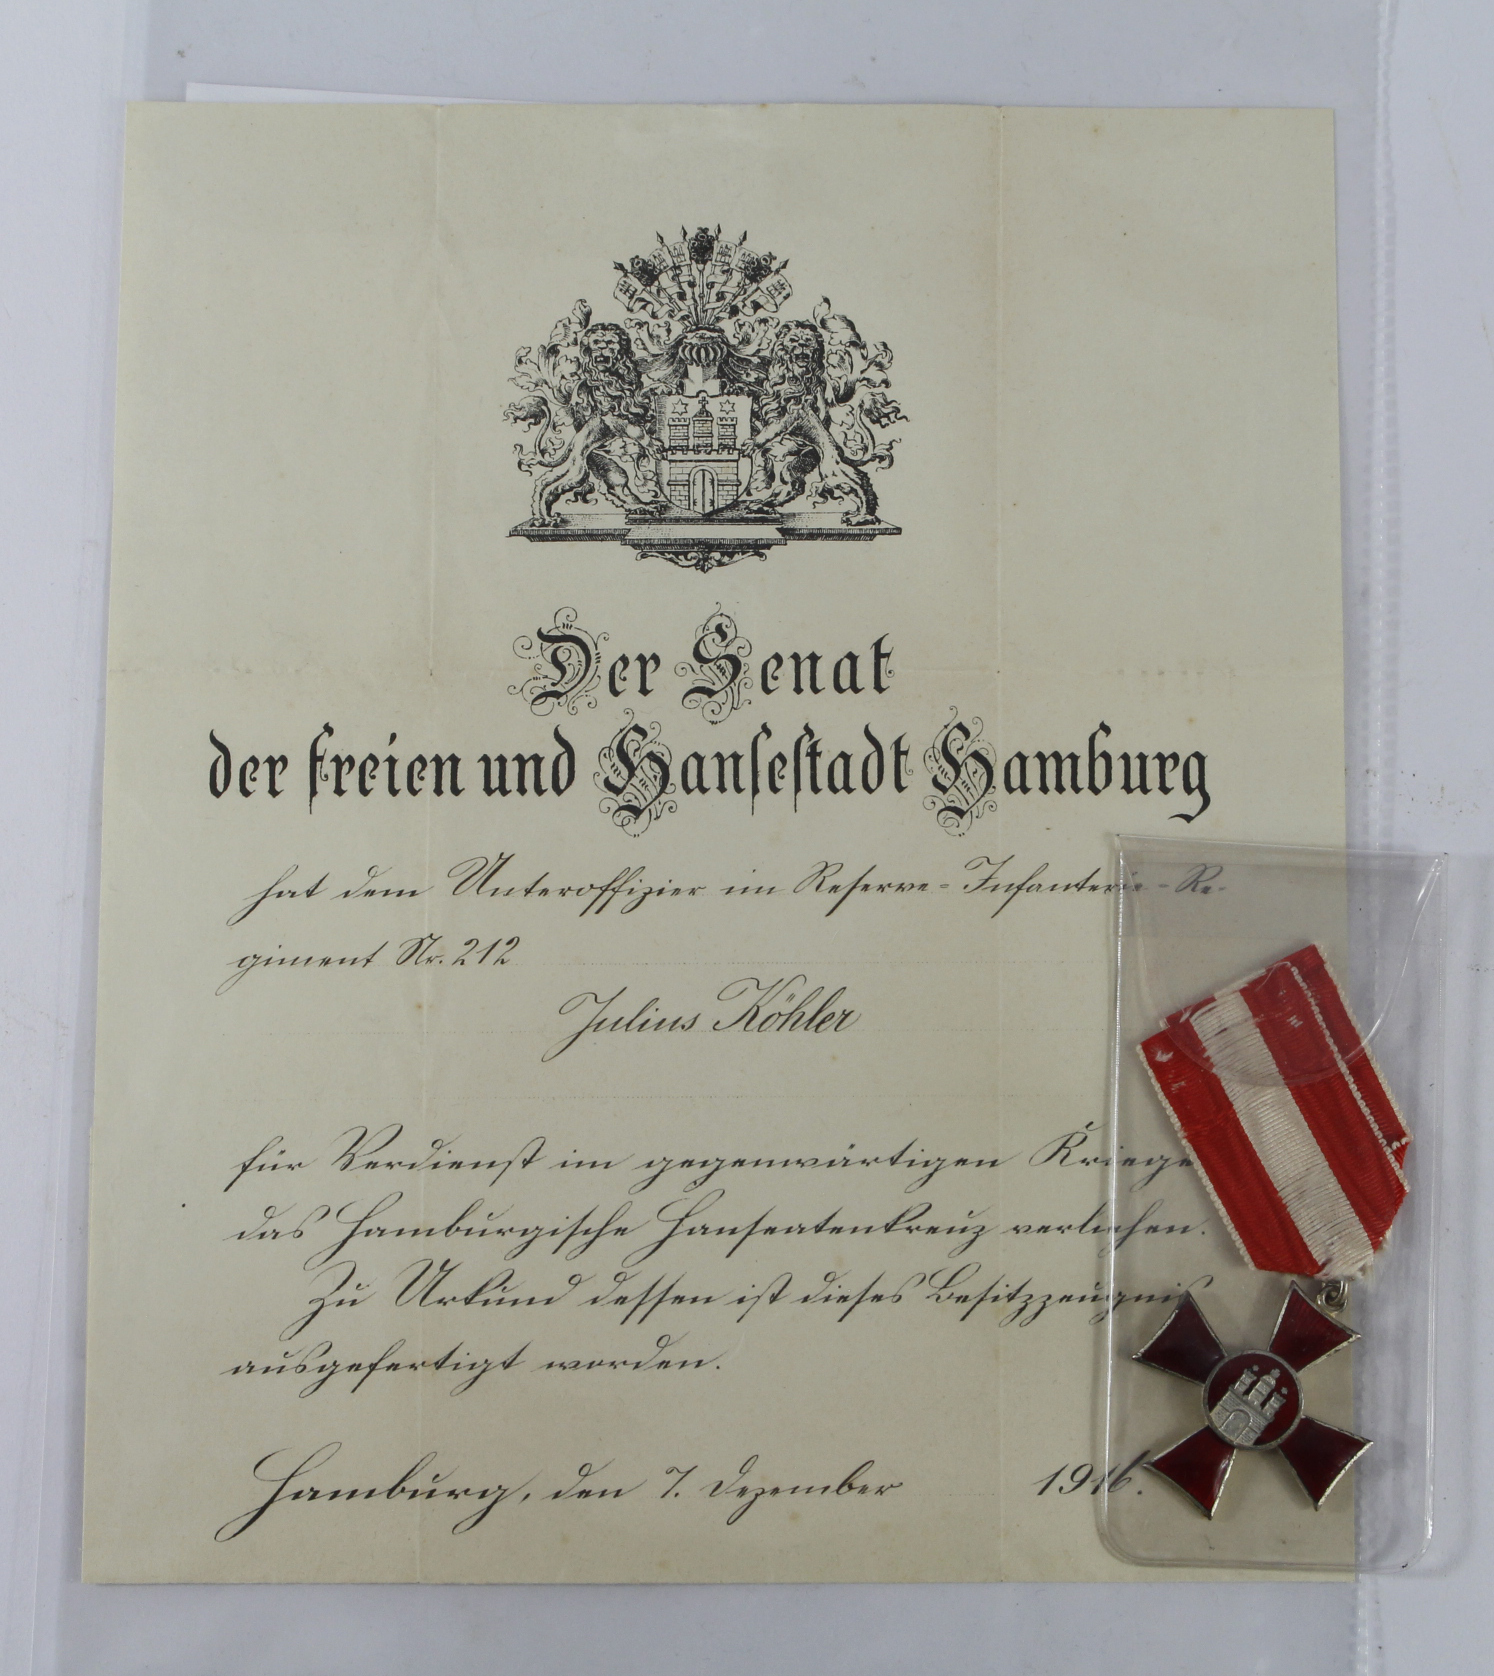 Imperial German WW1 Hamburg Hanseatic Cross for merit with award document to Unteroffizier Julius